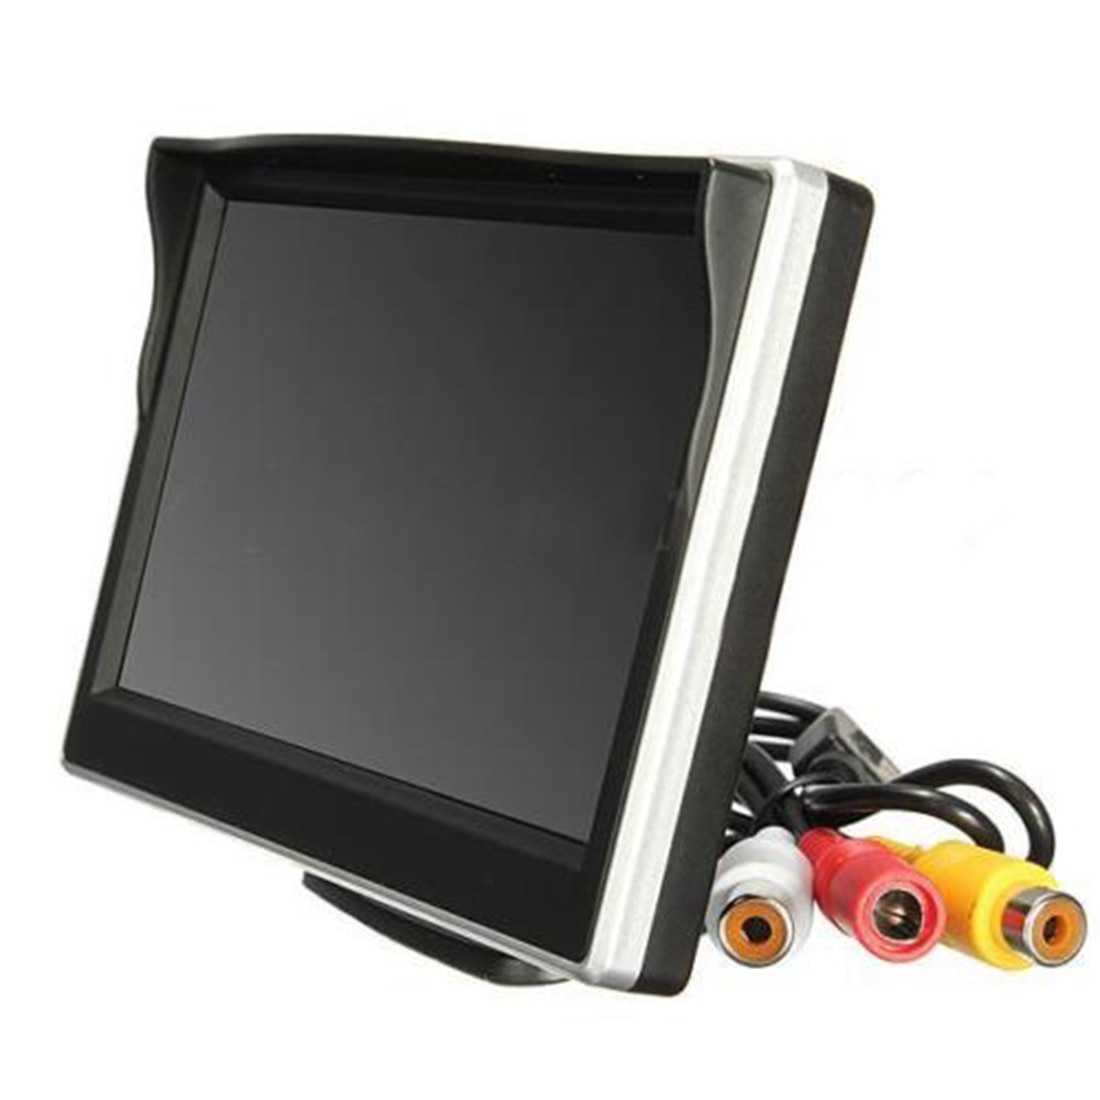 5" 800*480 TFT LCD HD Screen Monitor for Car Rear Rearview Backup Camera